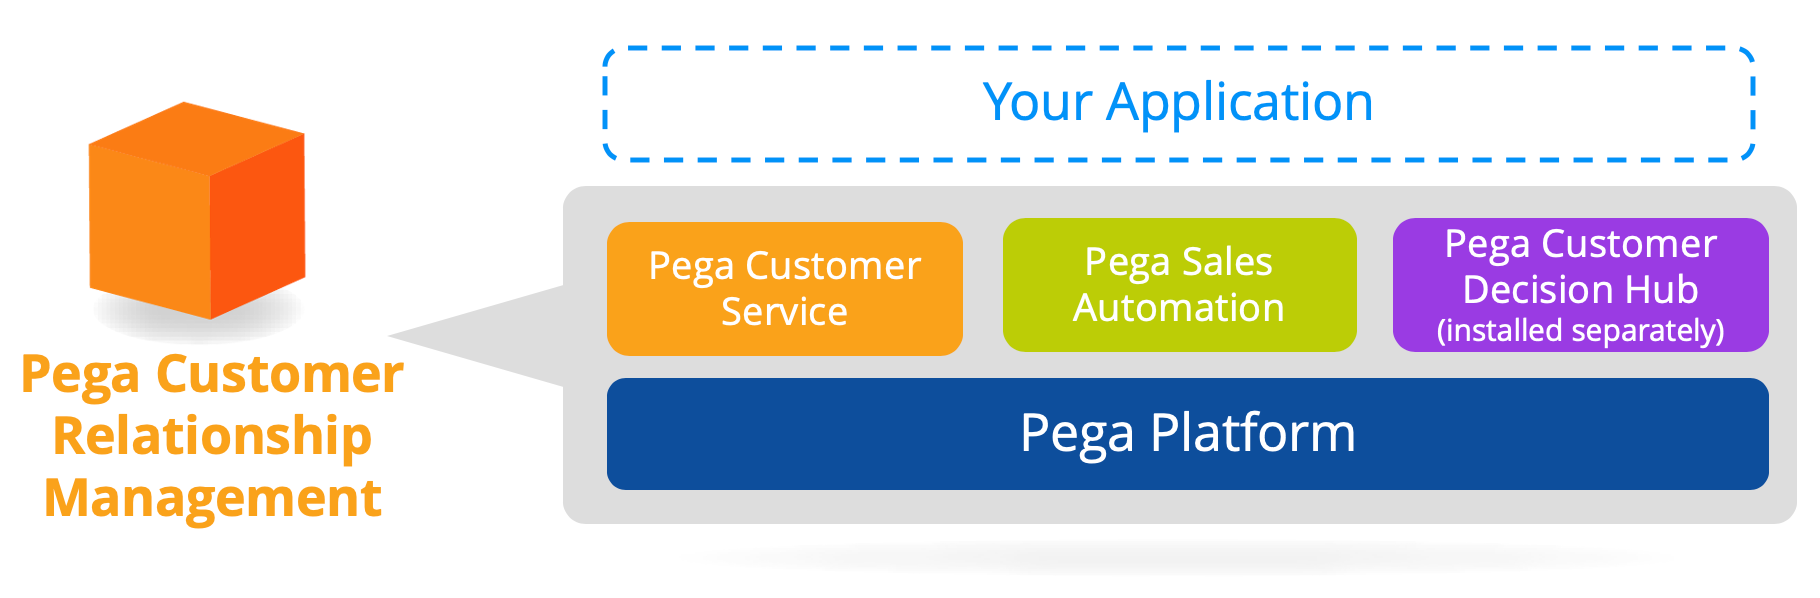 Pega Sales Automation application stack